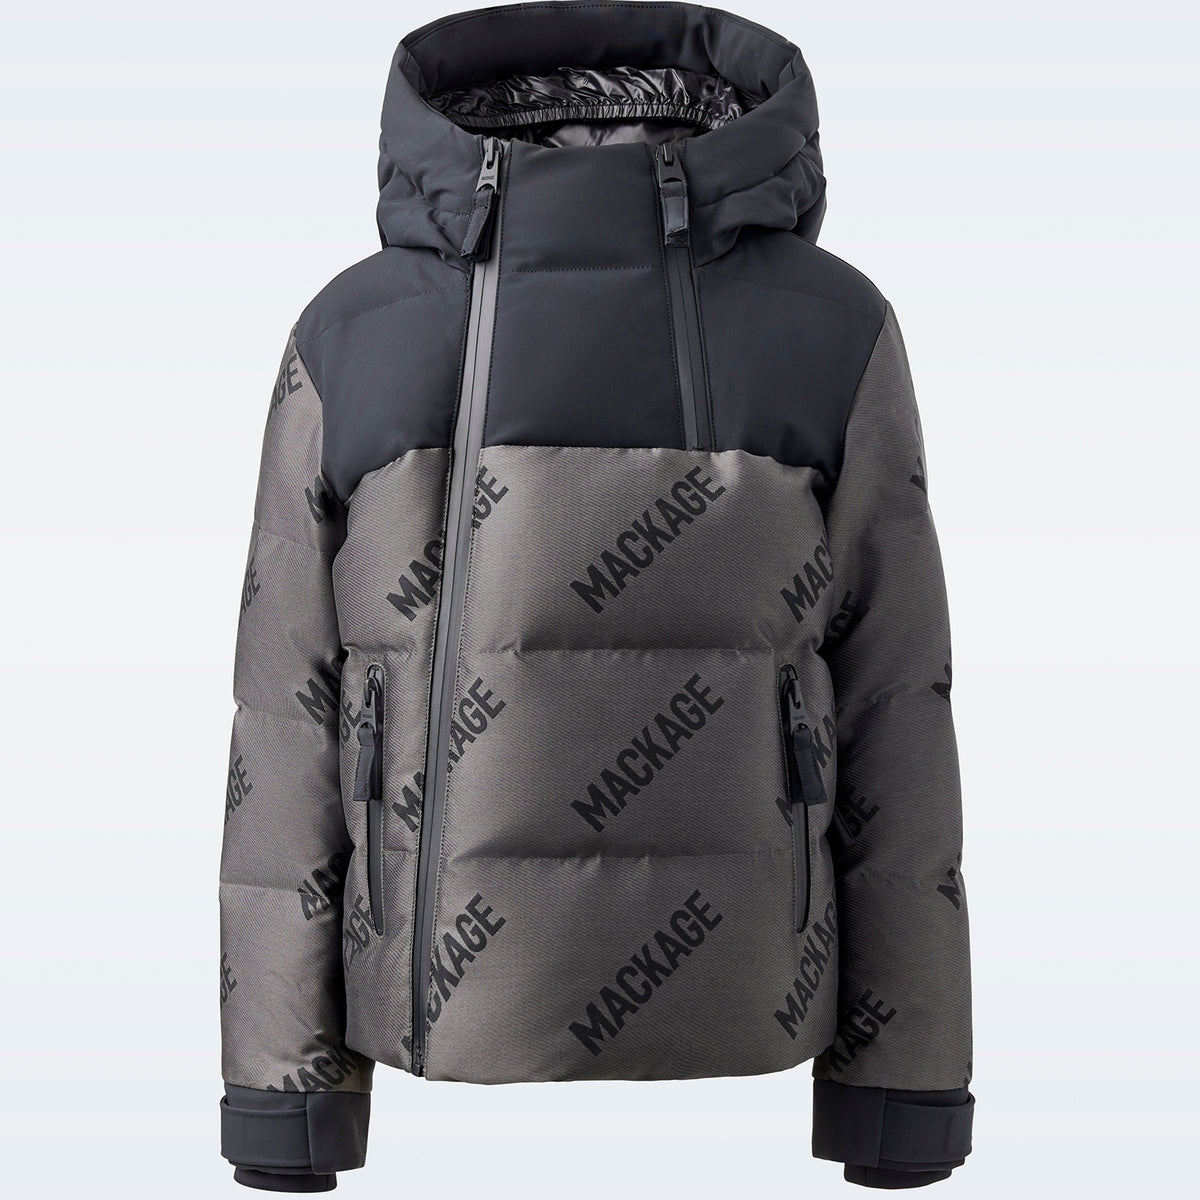 Leland, Down ski jacket with jacquard logo pattern throughout for